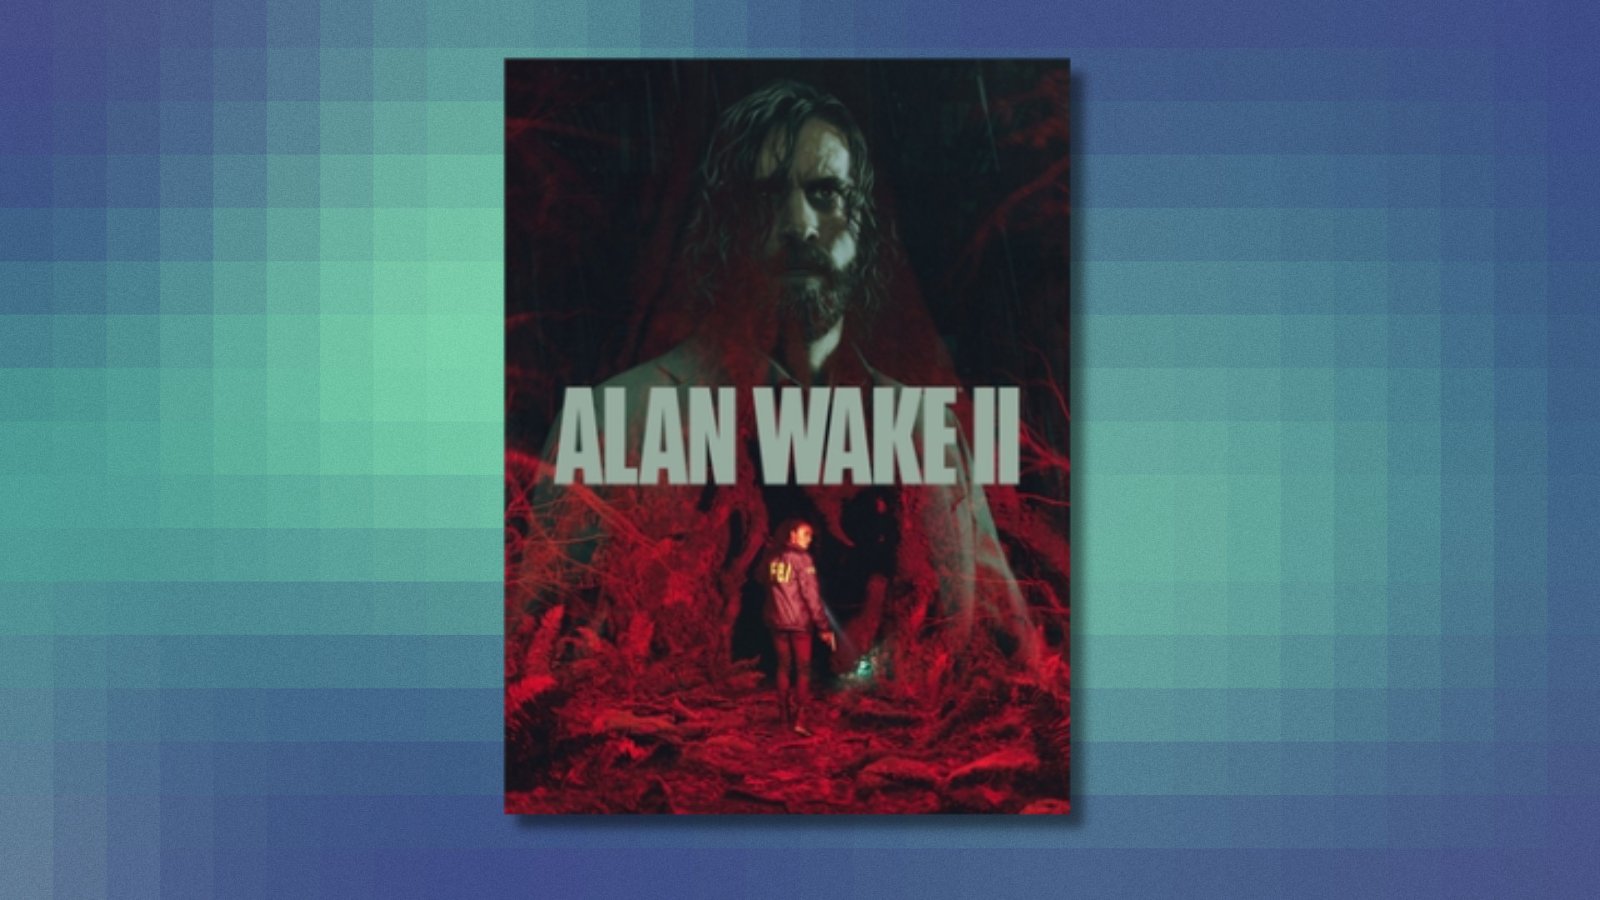 Alan Wake 2 box art on abstract background